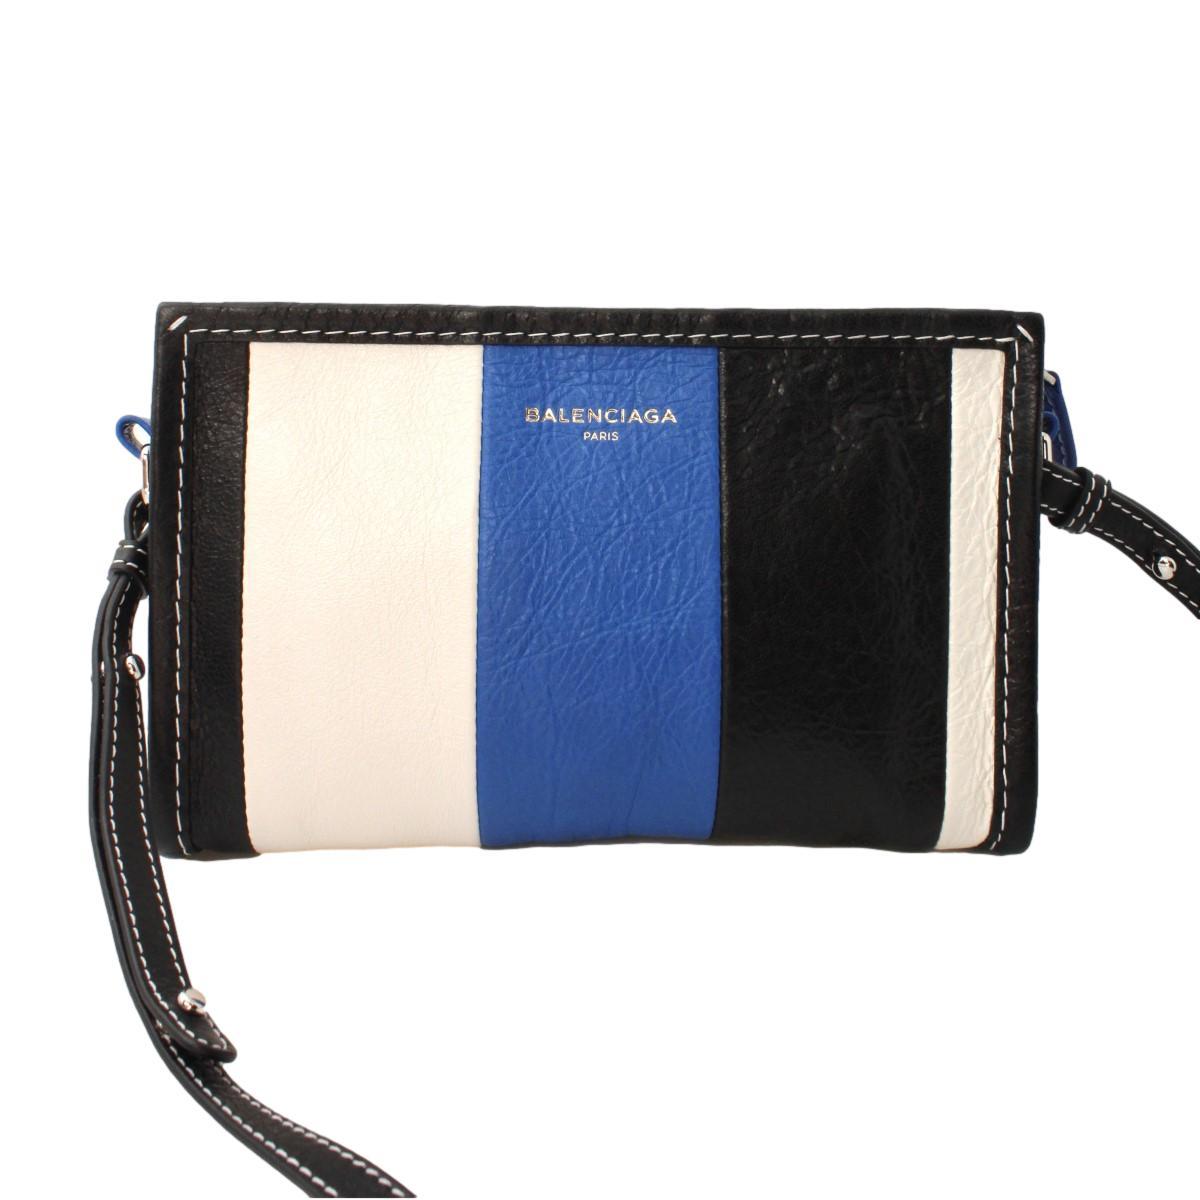 Balenciaga Bazar Multicolor Striped Leather Crossbody Bag 452460 at_Queen_Bee_of_Beverly_Hills